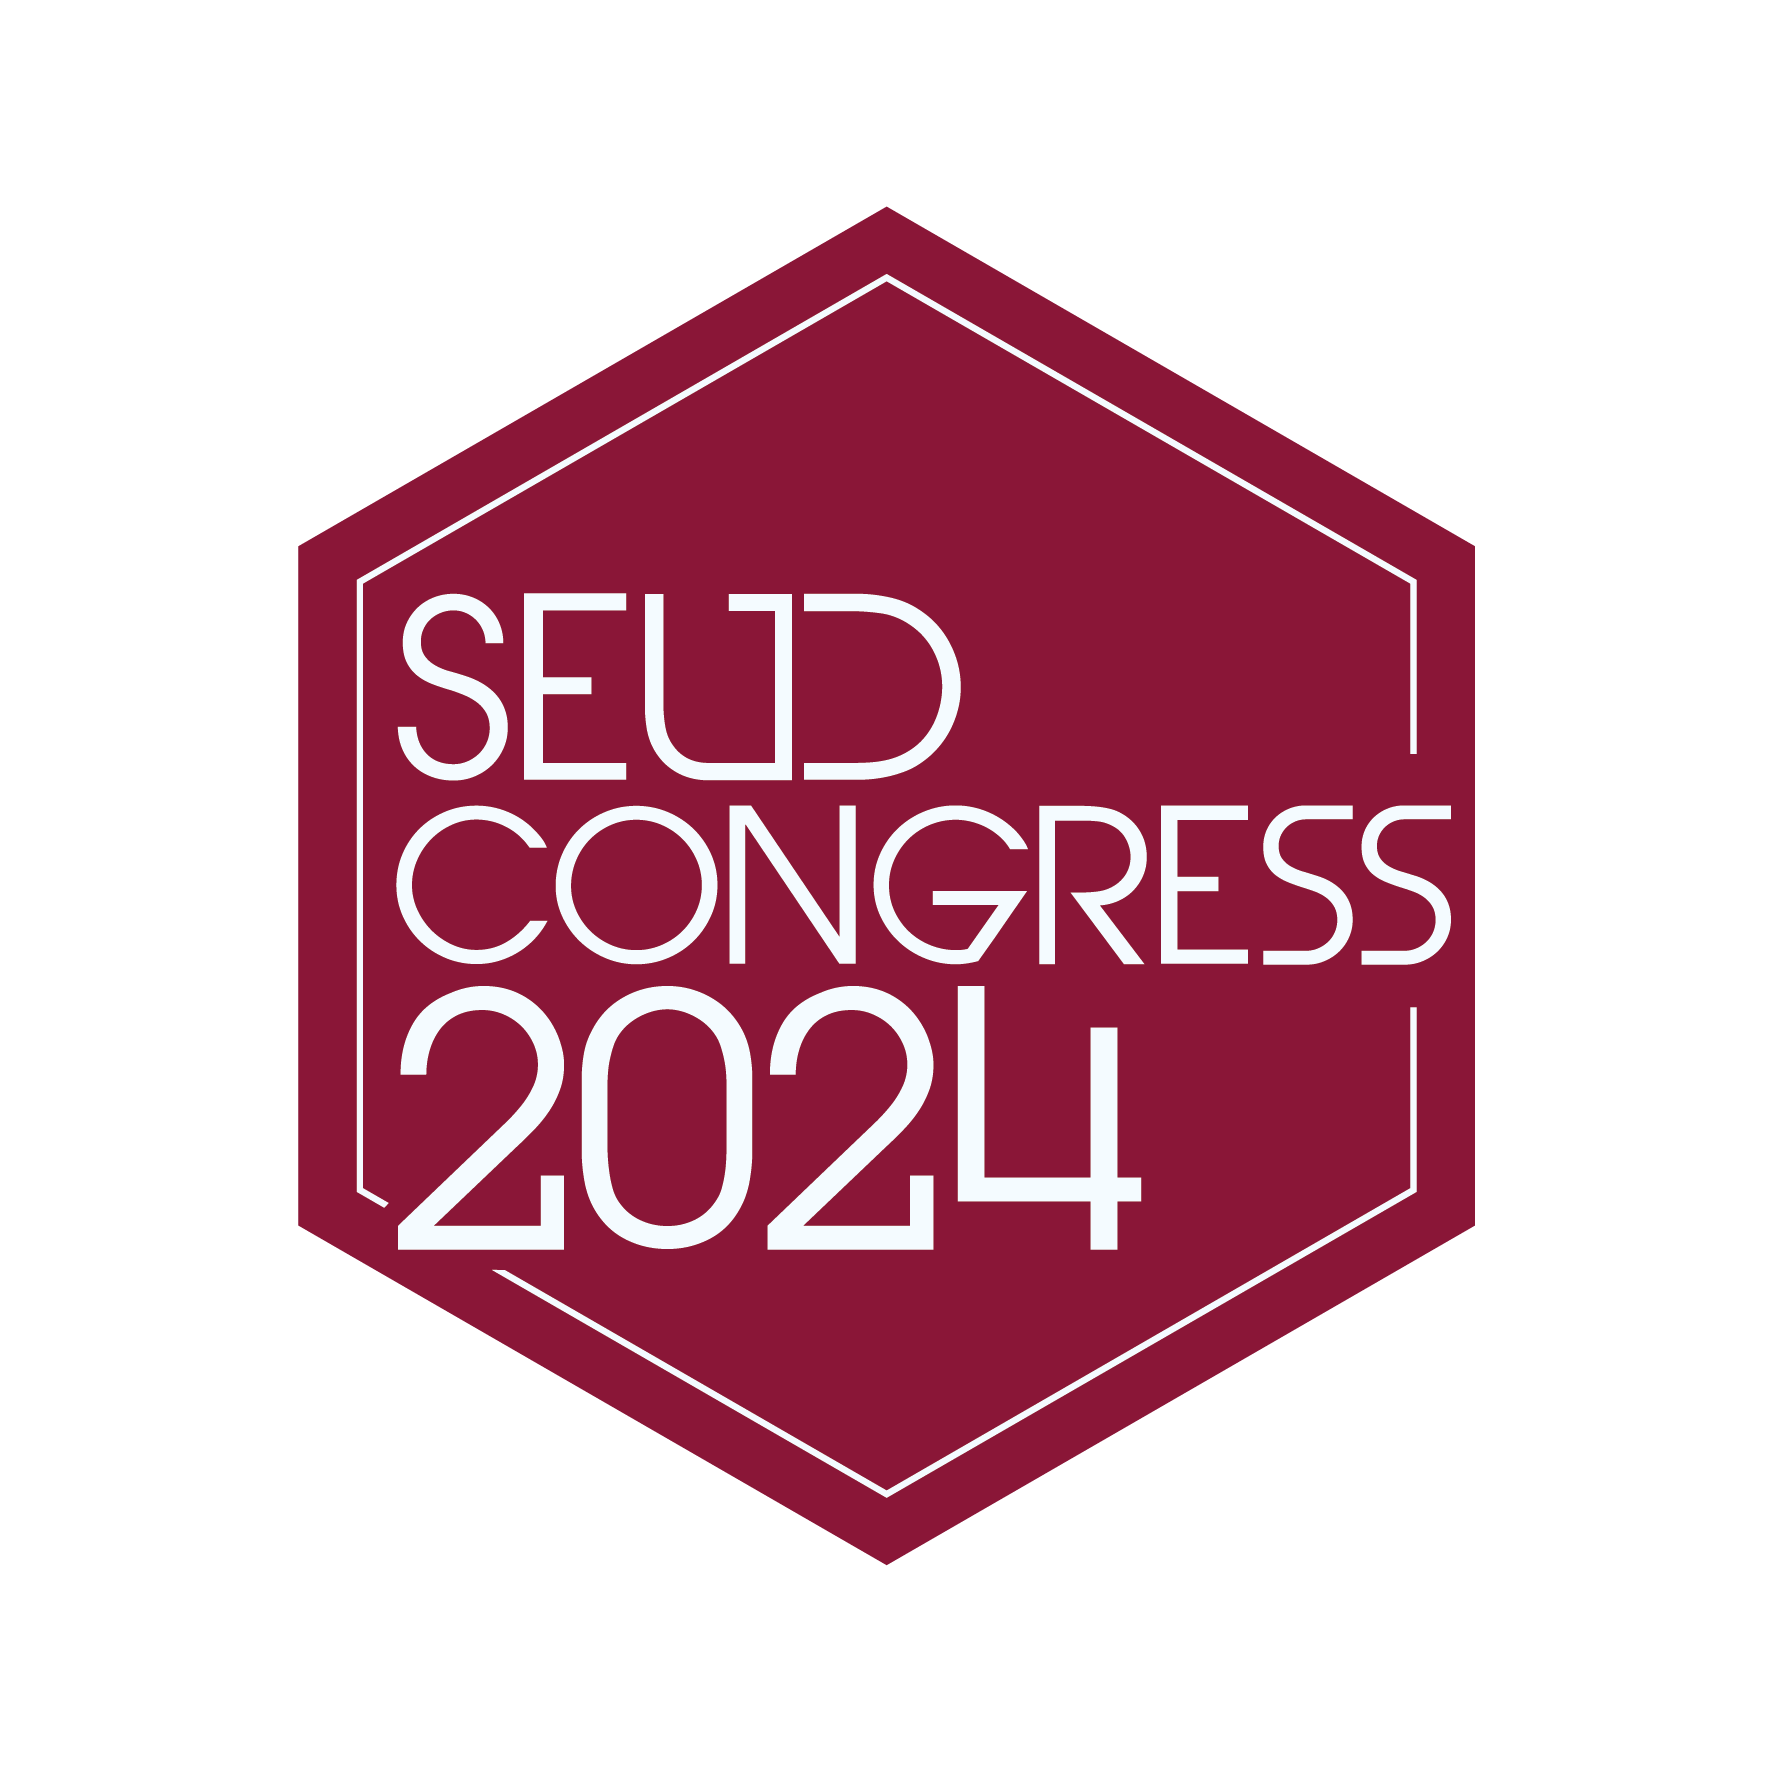 SEUD Congress